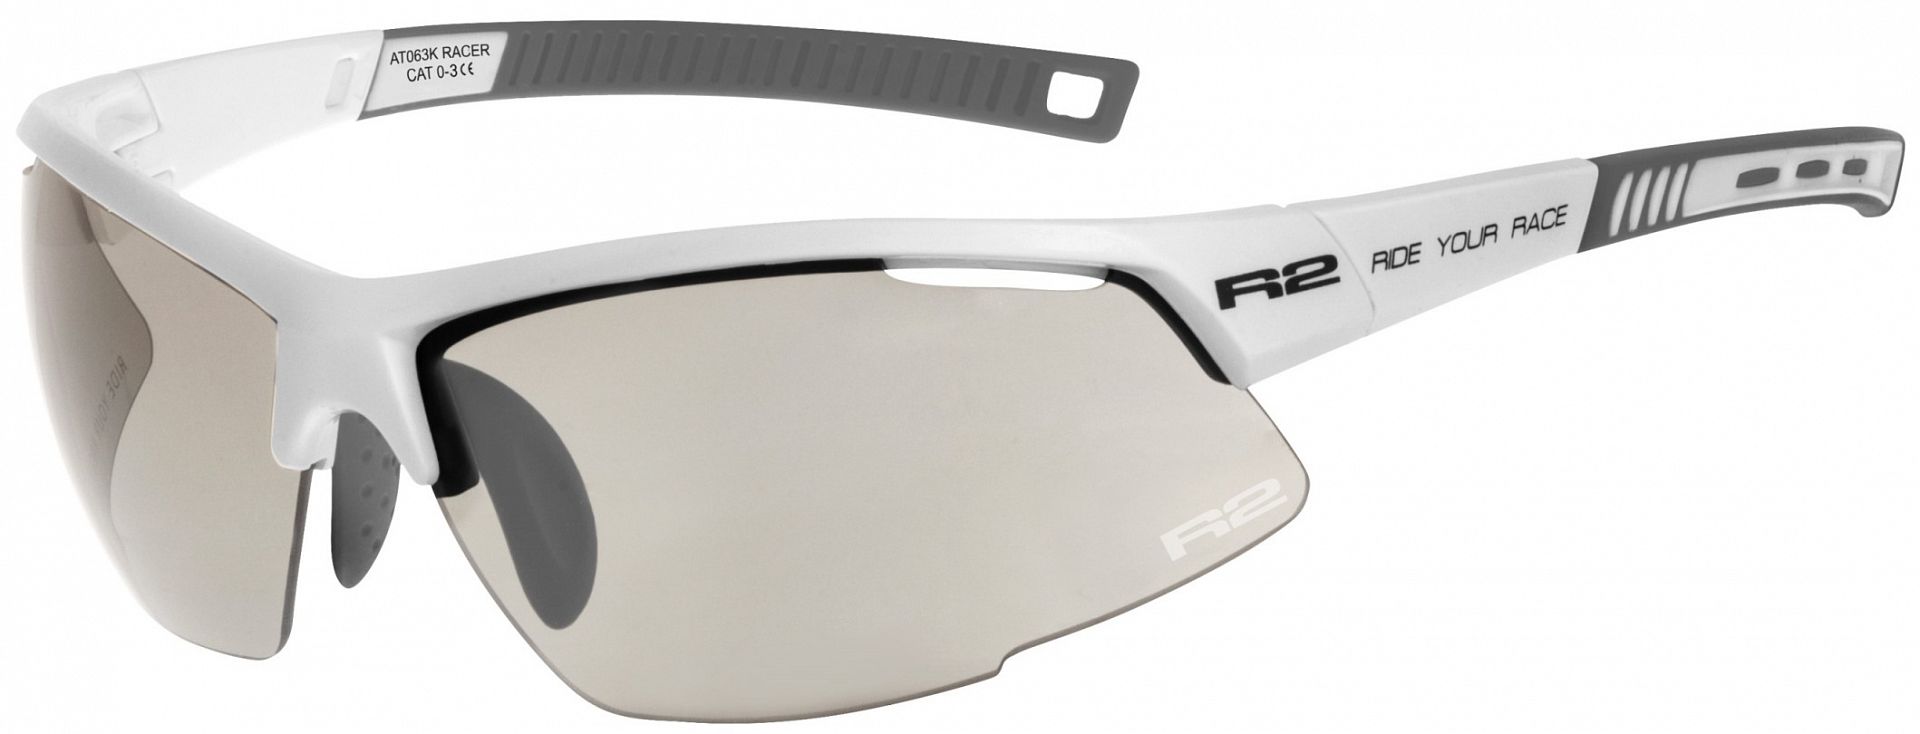 Fotochromatické brýle R2 RACER bílá